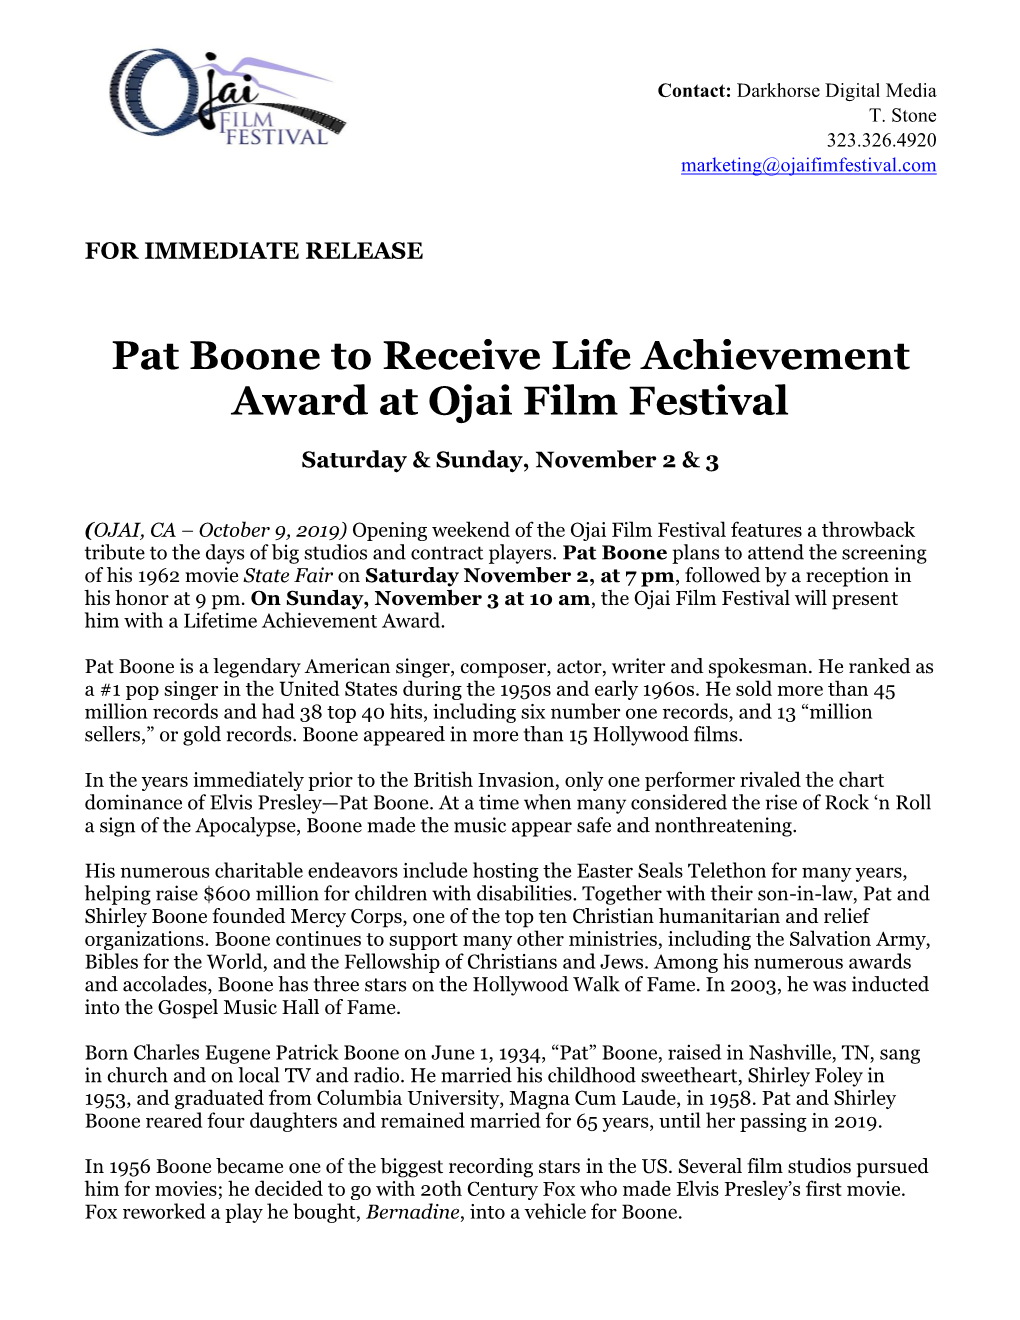 Pat Boone to Receive Life Achievement Award at Ojai Film Festival